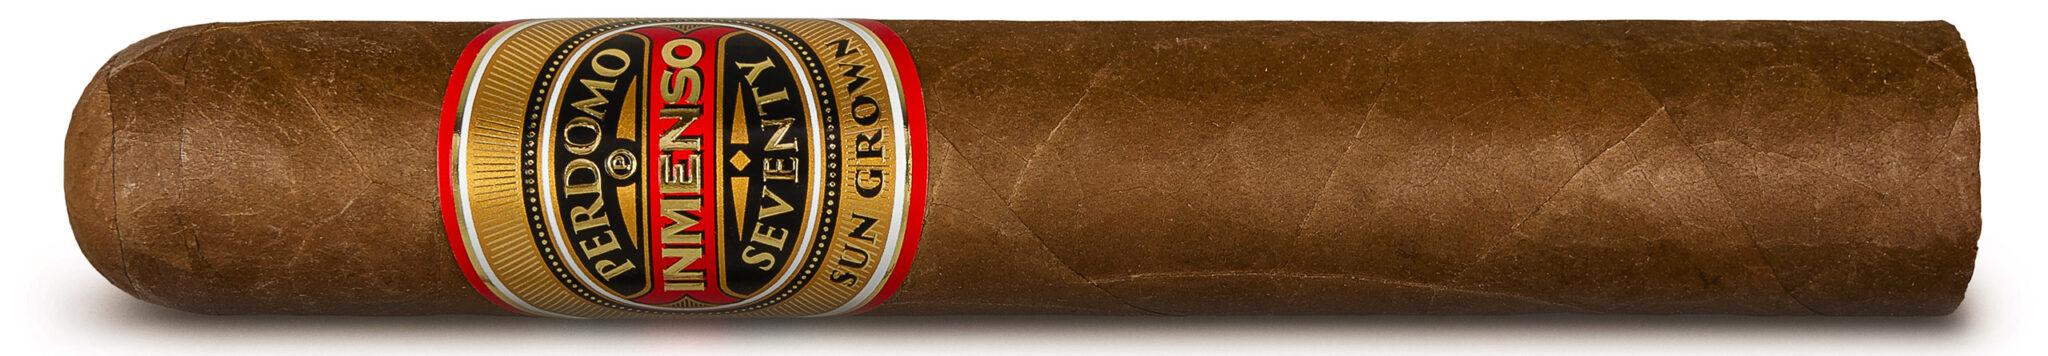 Сигара №4 2022 года по версии Cigarjournal — PERDOMO INMENSO SEVENTY SUN GROWN CHURCHILL